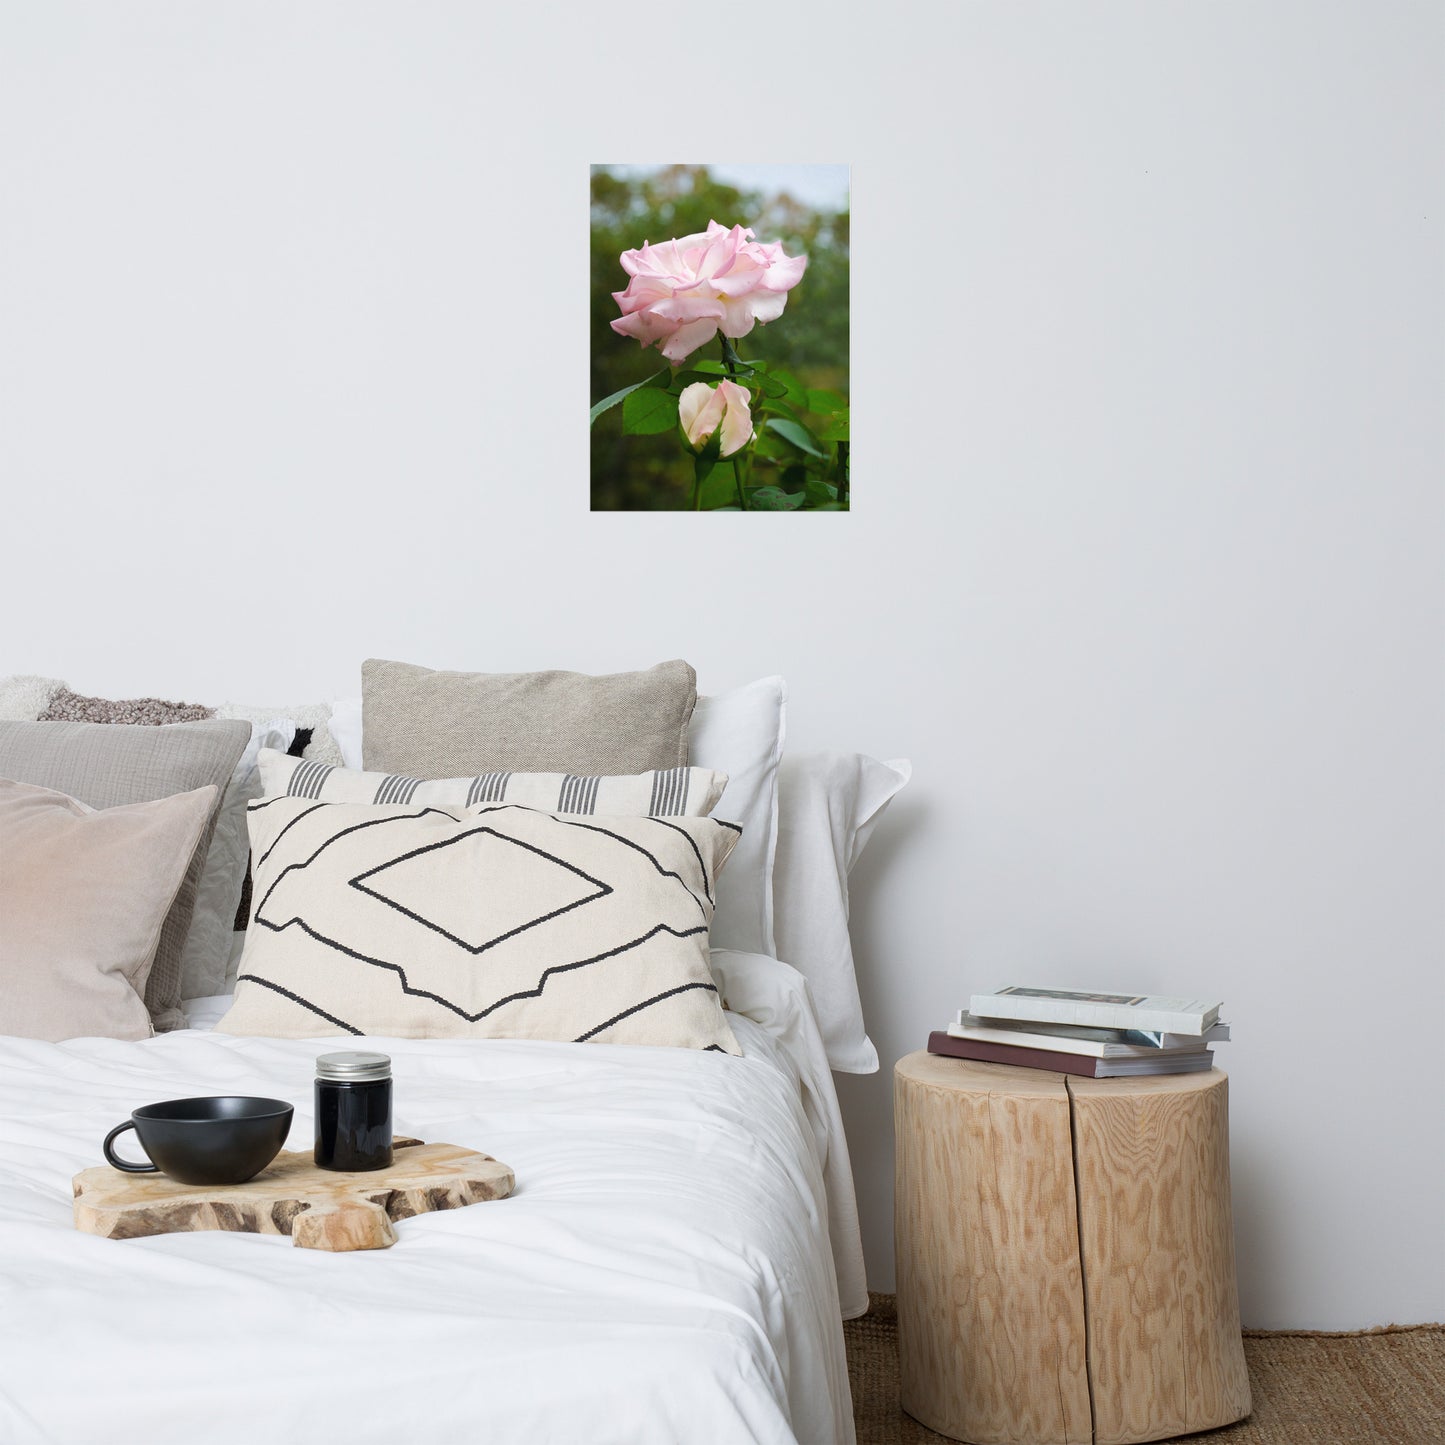 Botanical Flower Poster: Admiration Rose - Botanical / Floral / Flora / Flowers / Nature Photograph Loose / Unframed / Frameless / Frameable Wall Art Print - Artwork